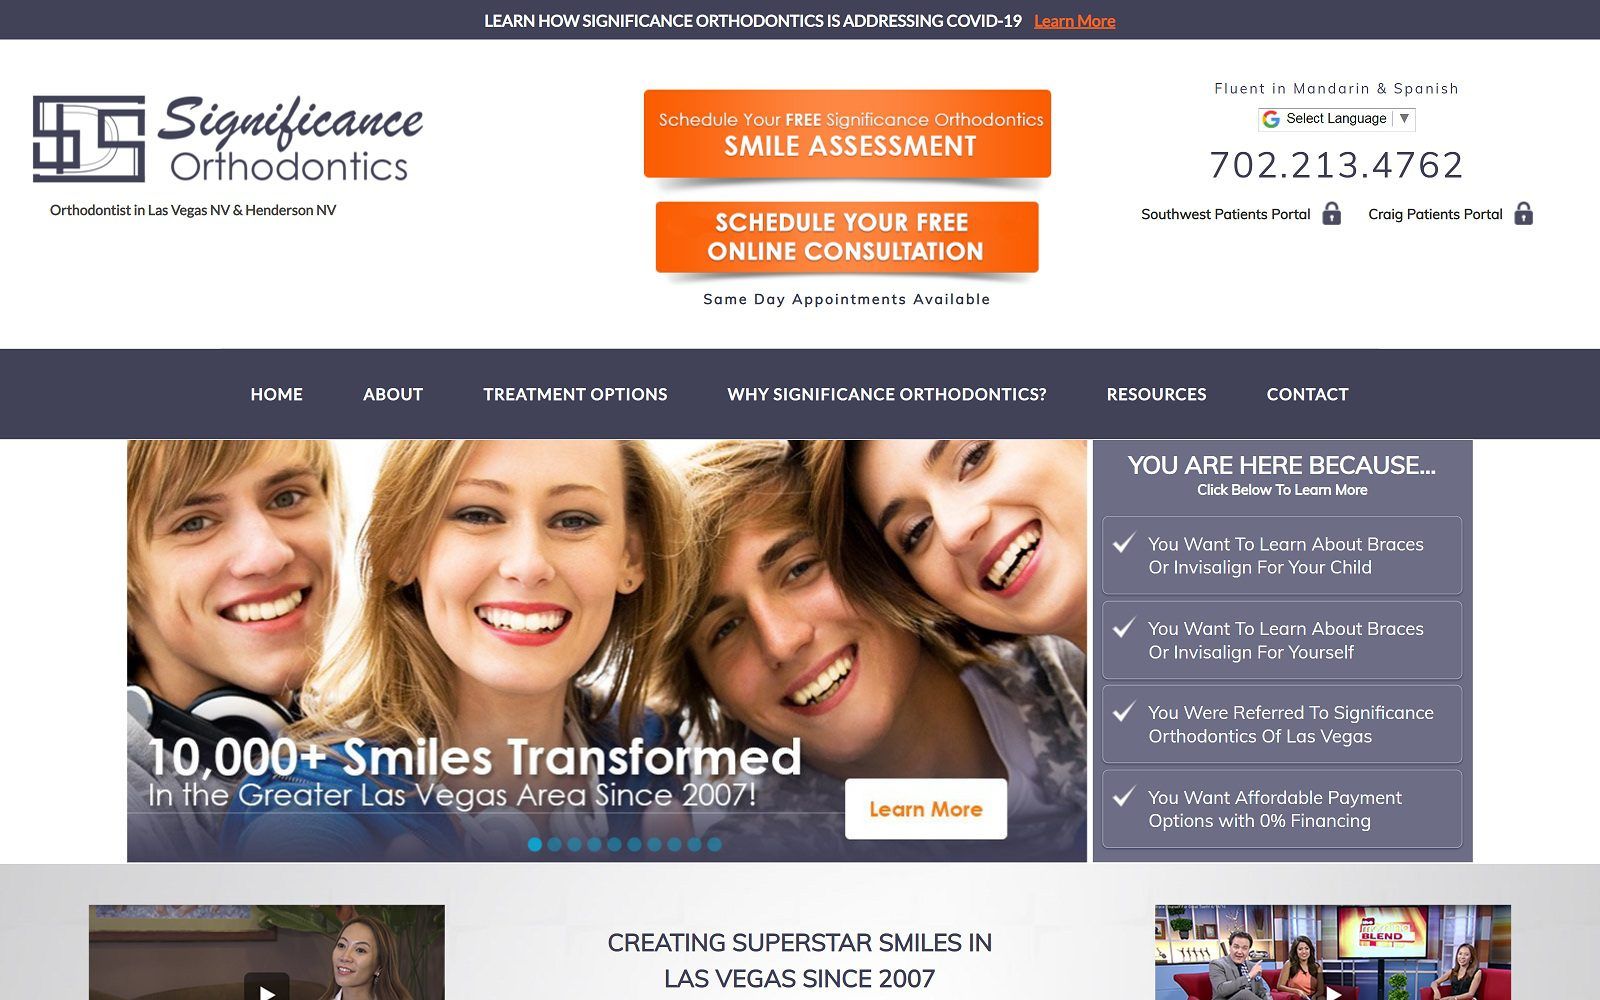 The screenshot of significance orthodontics website